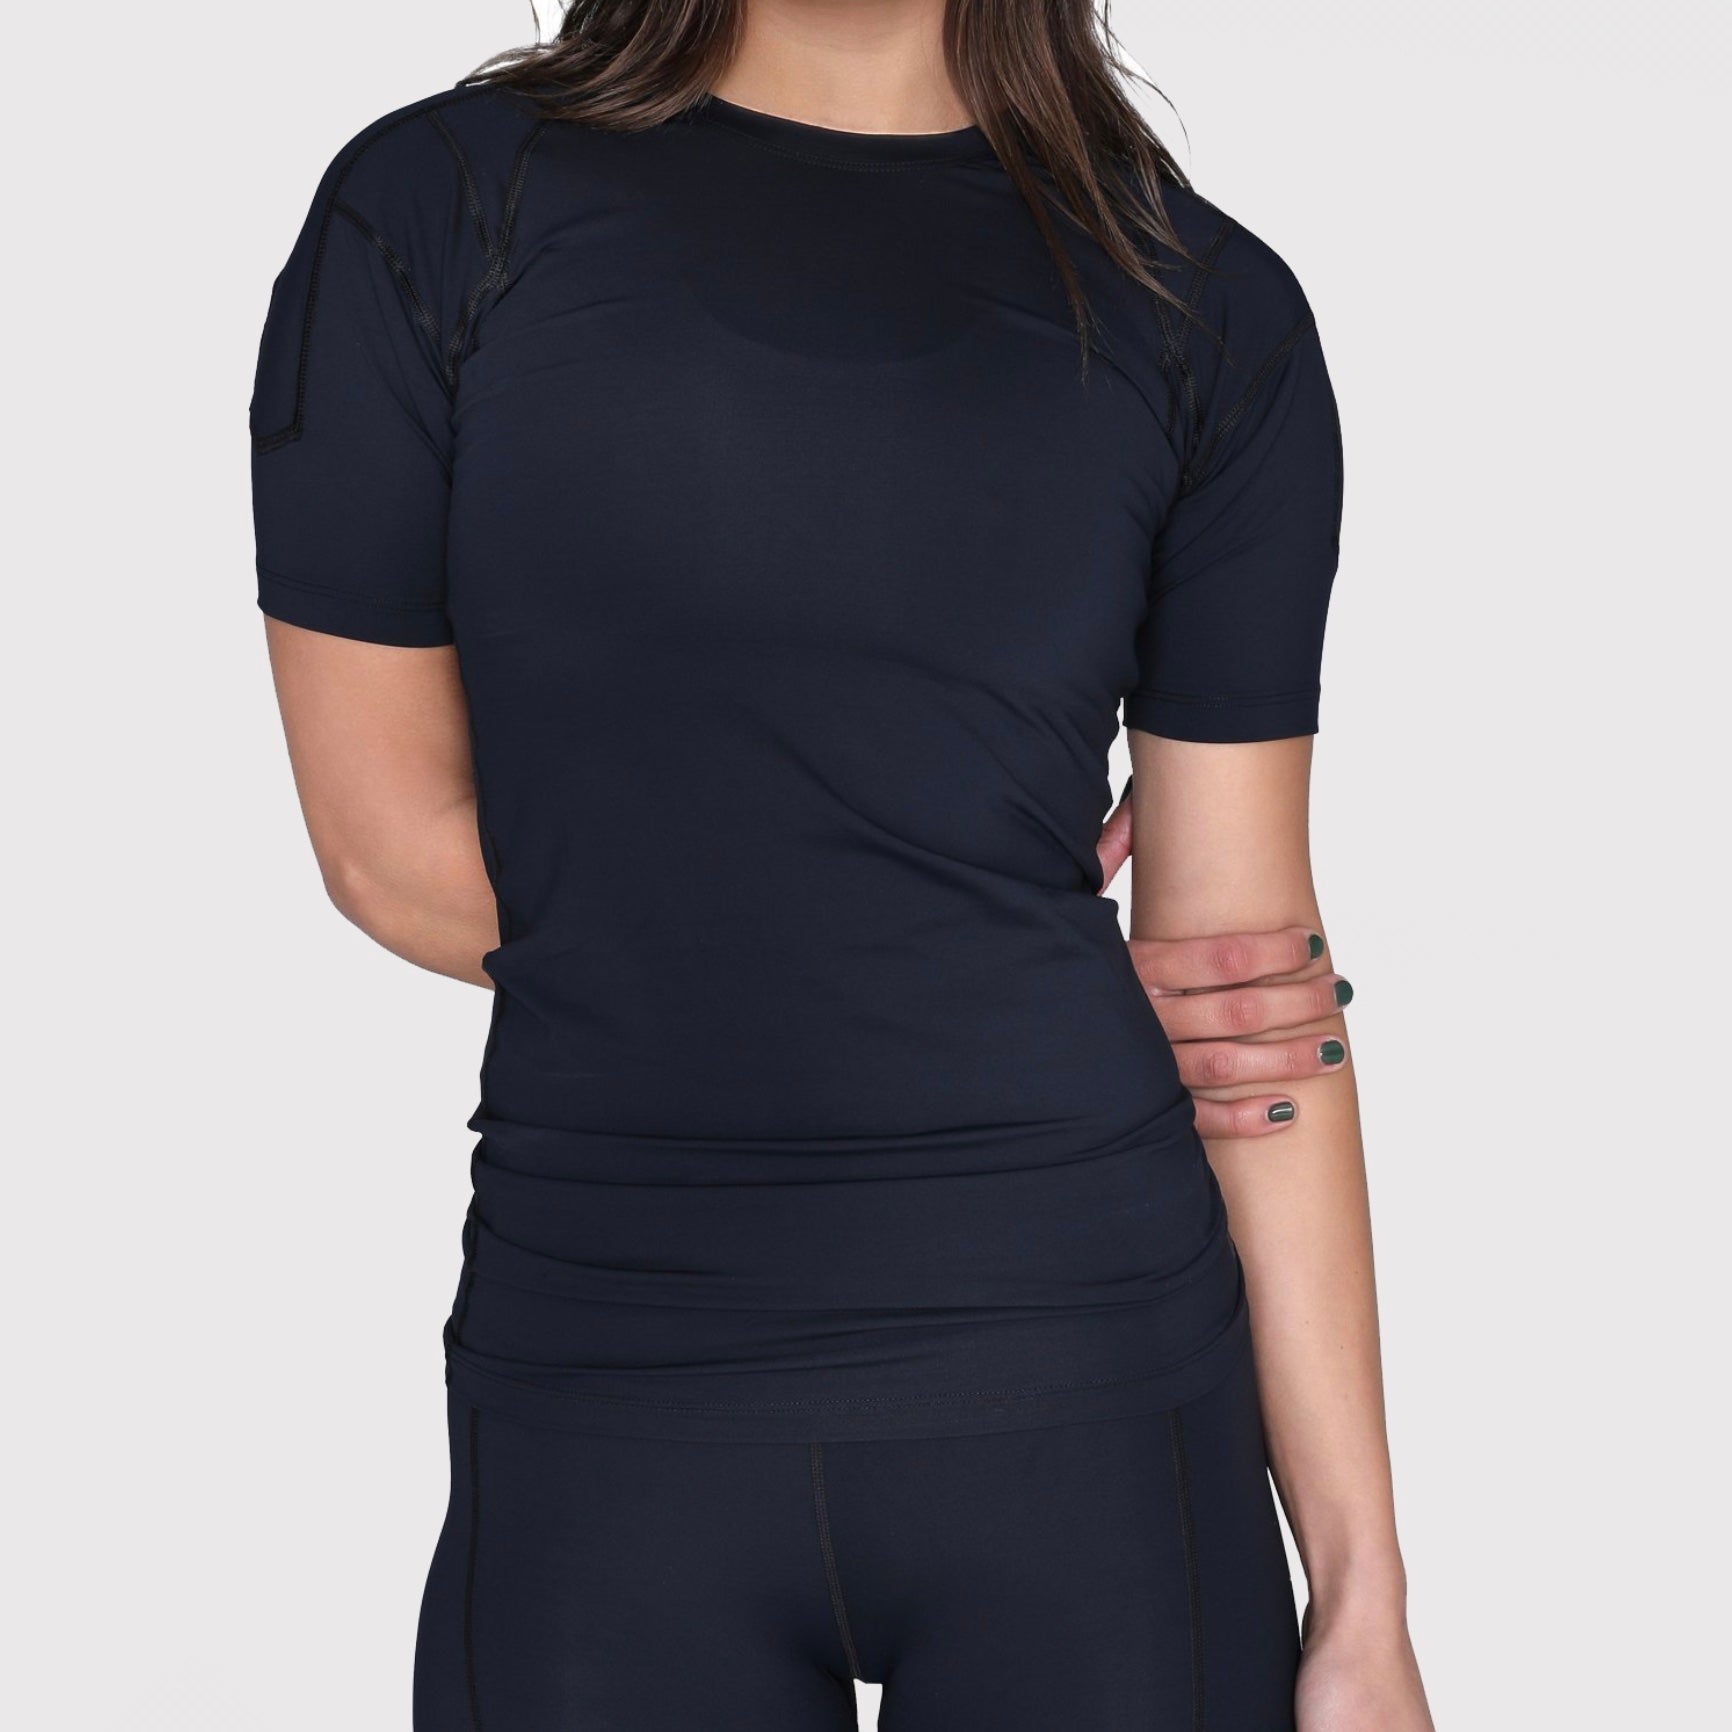 Women's Athletic Compression short sleeve Top Women, Grey/Black - Zeropoint